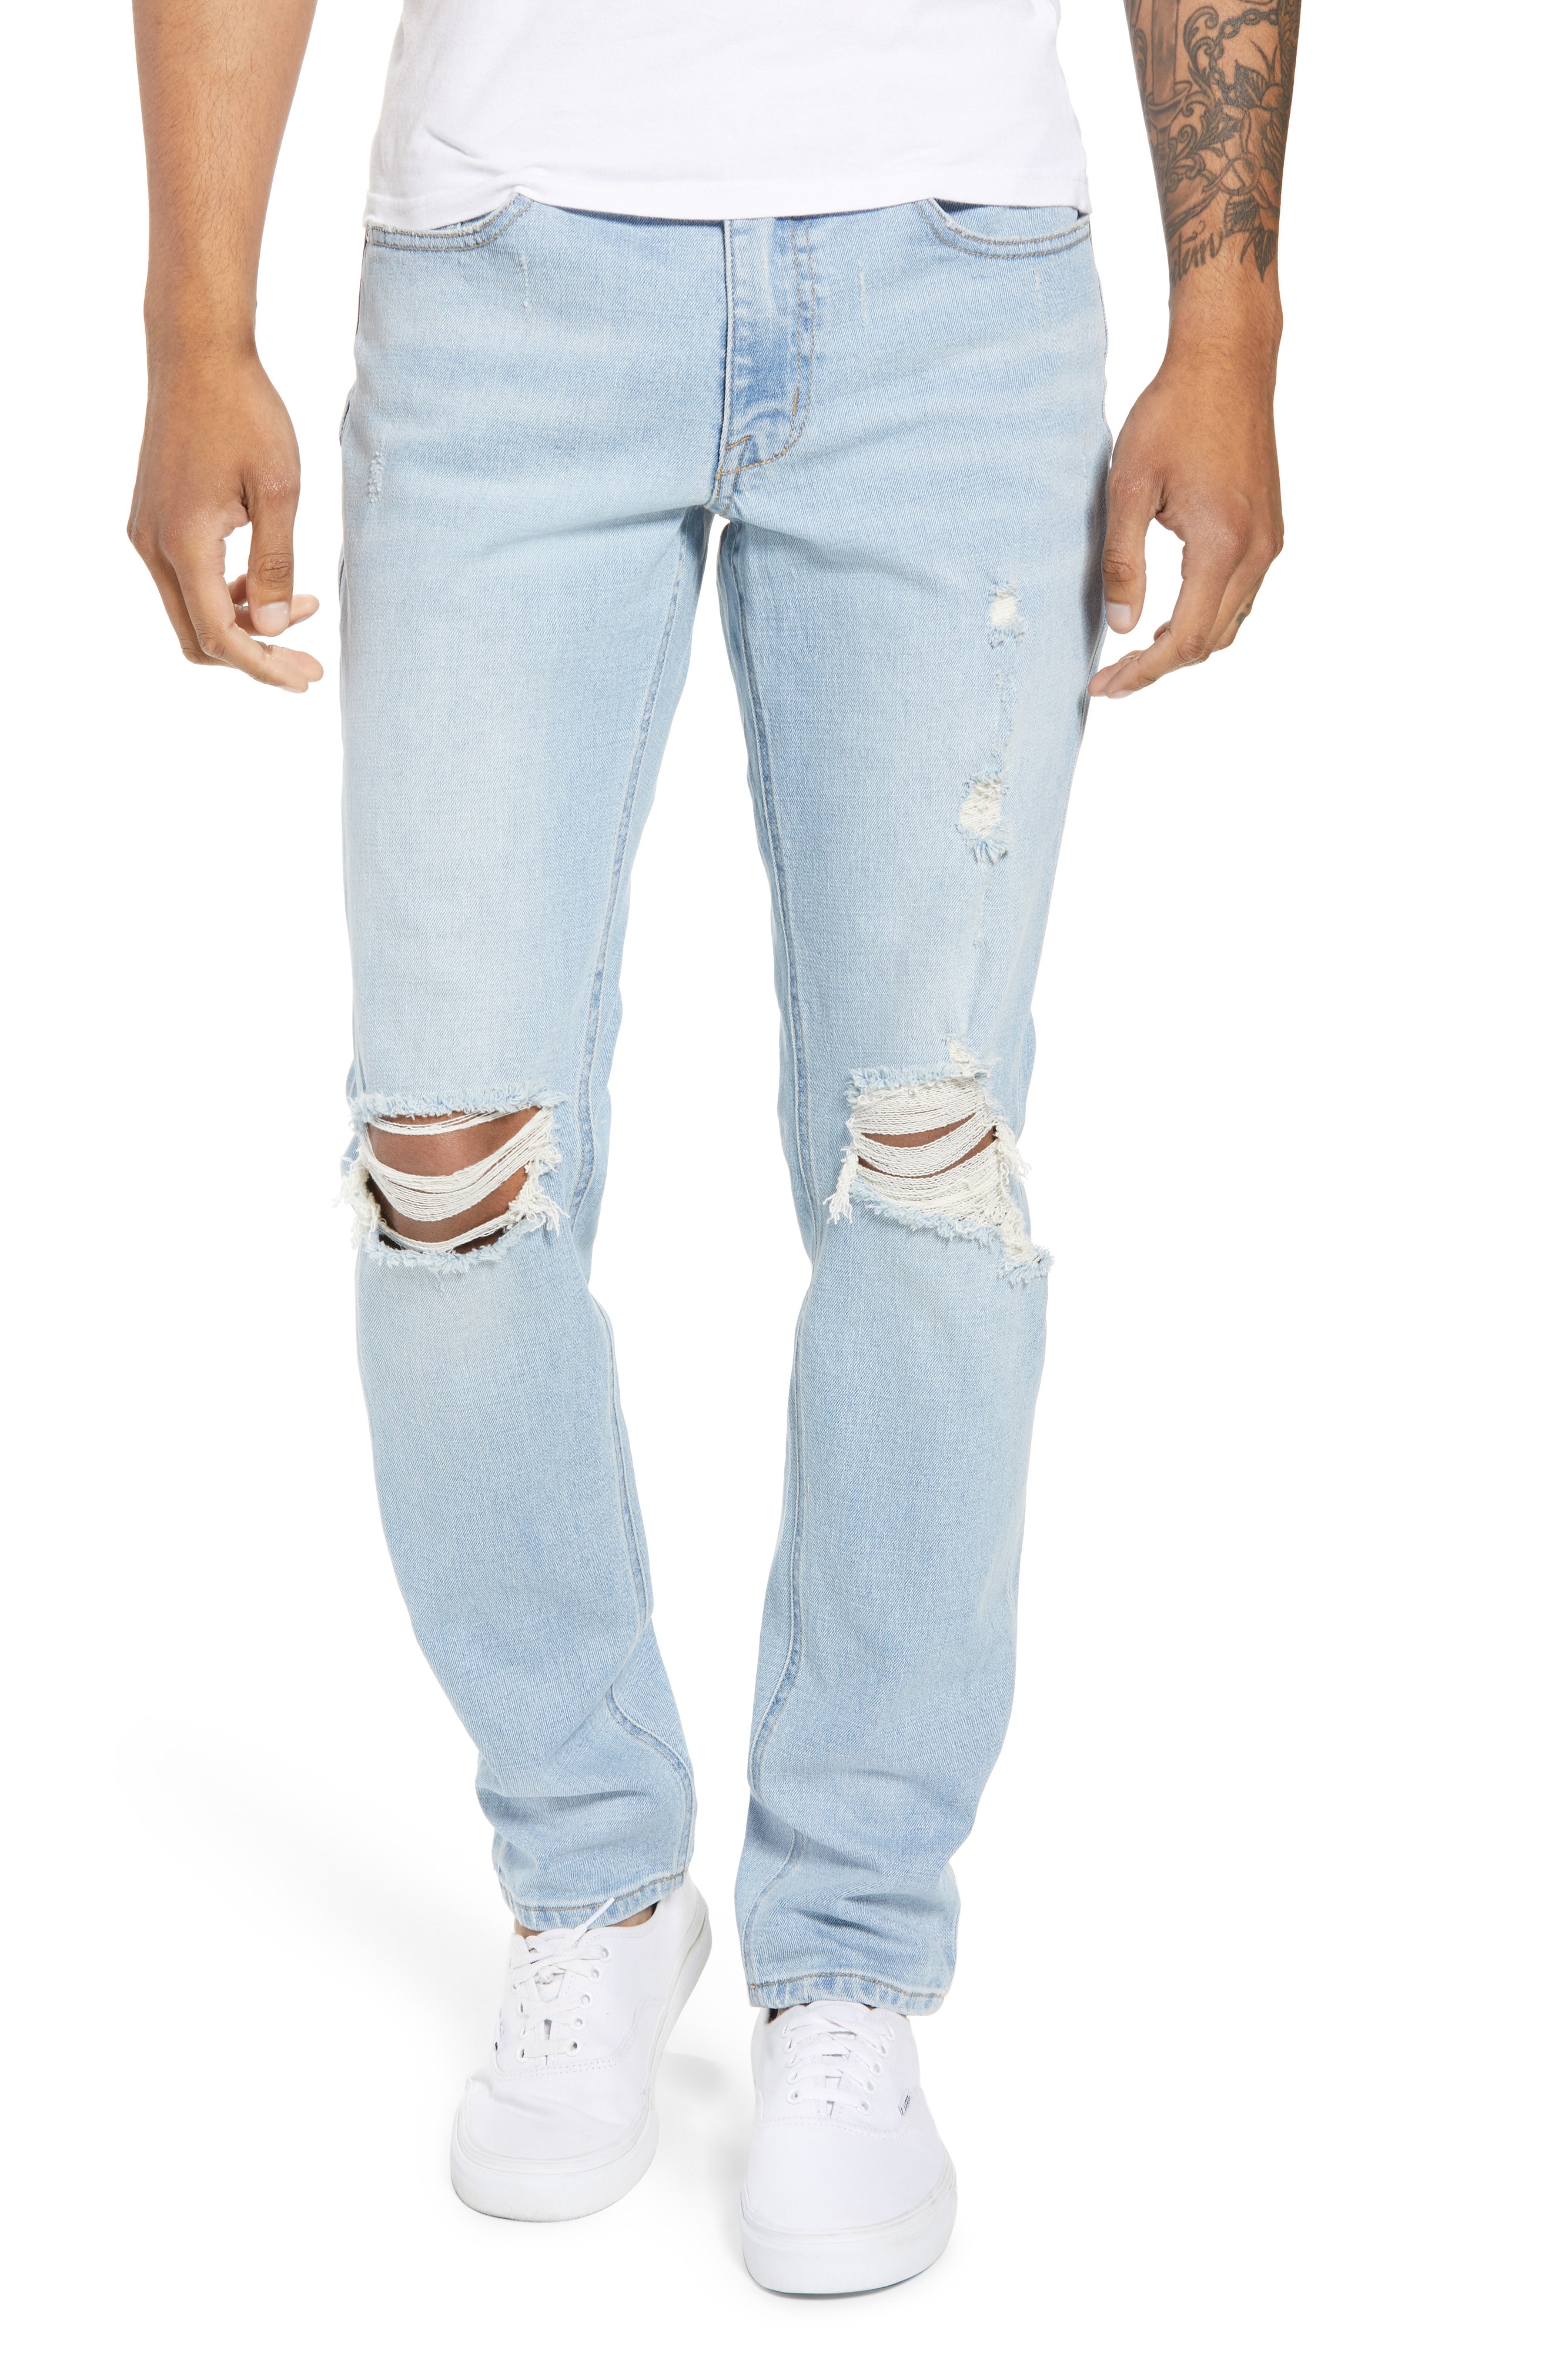 Men's Ripped & Destroyed Jeans | Nordstrom